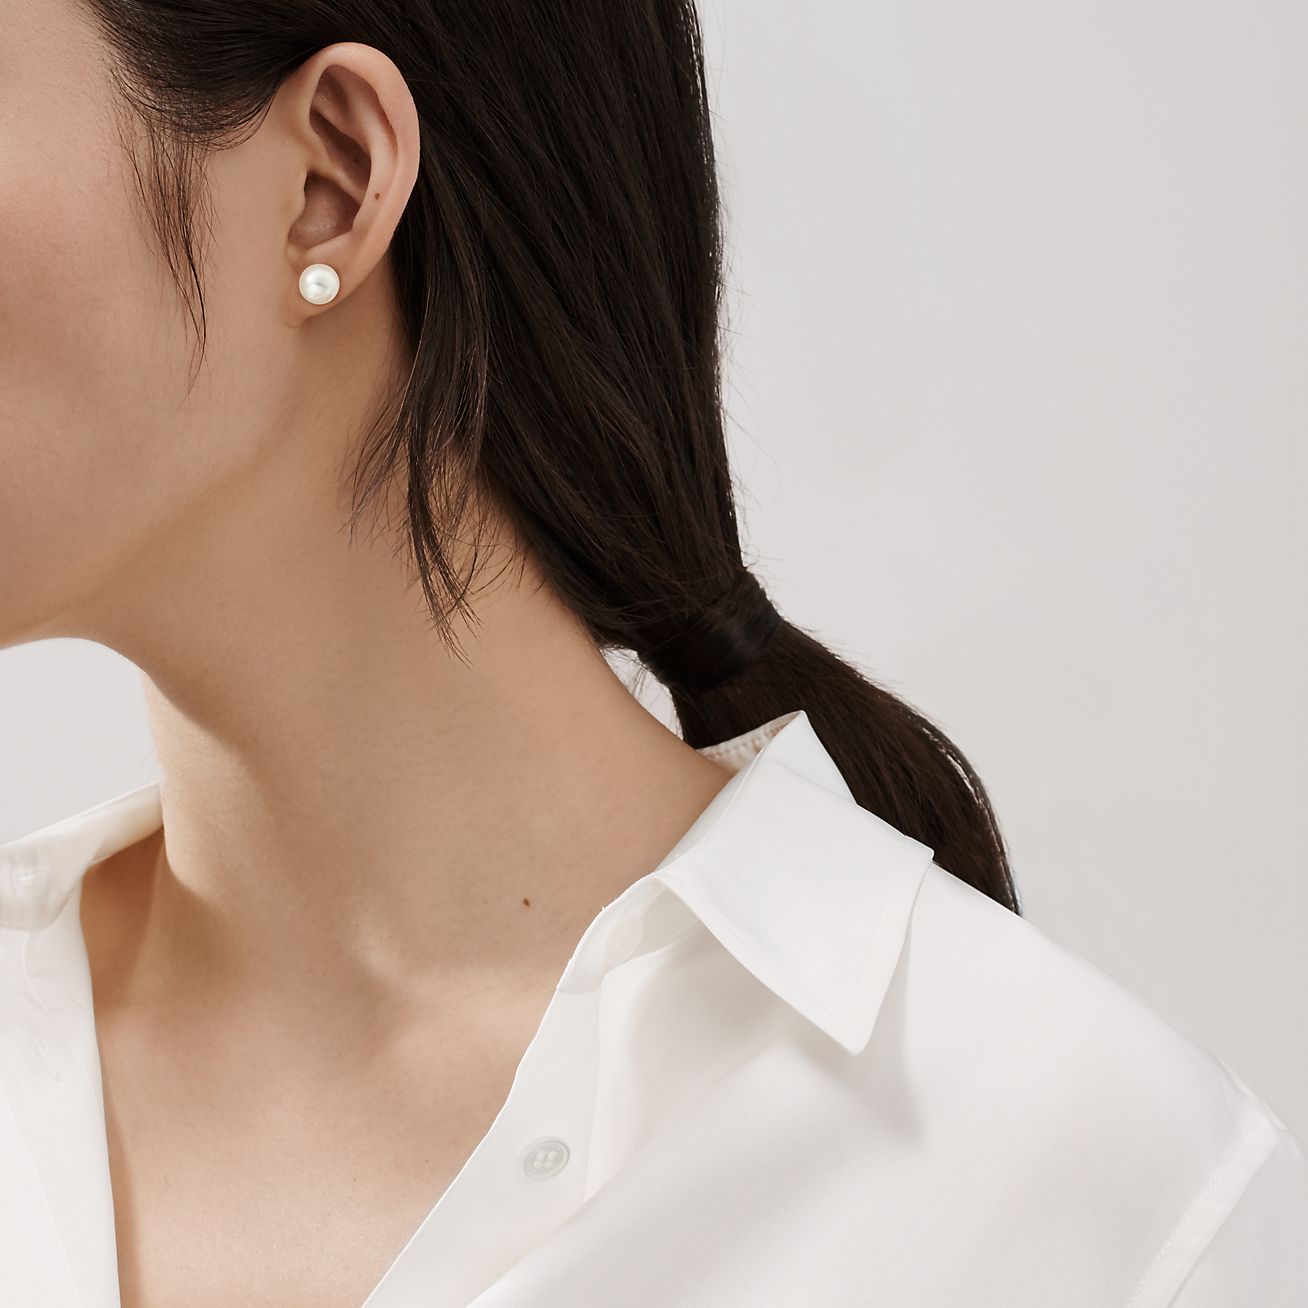 Tiffany Signature® Pearls earrings of 